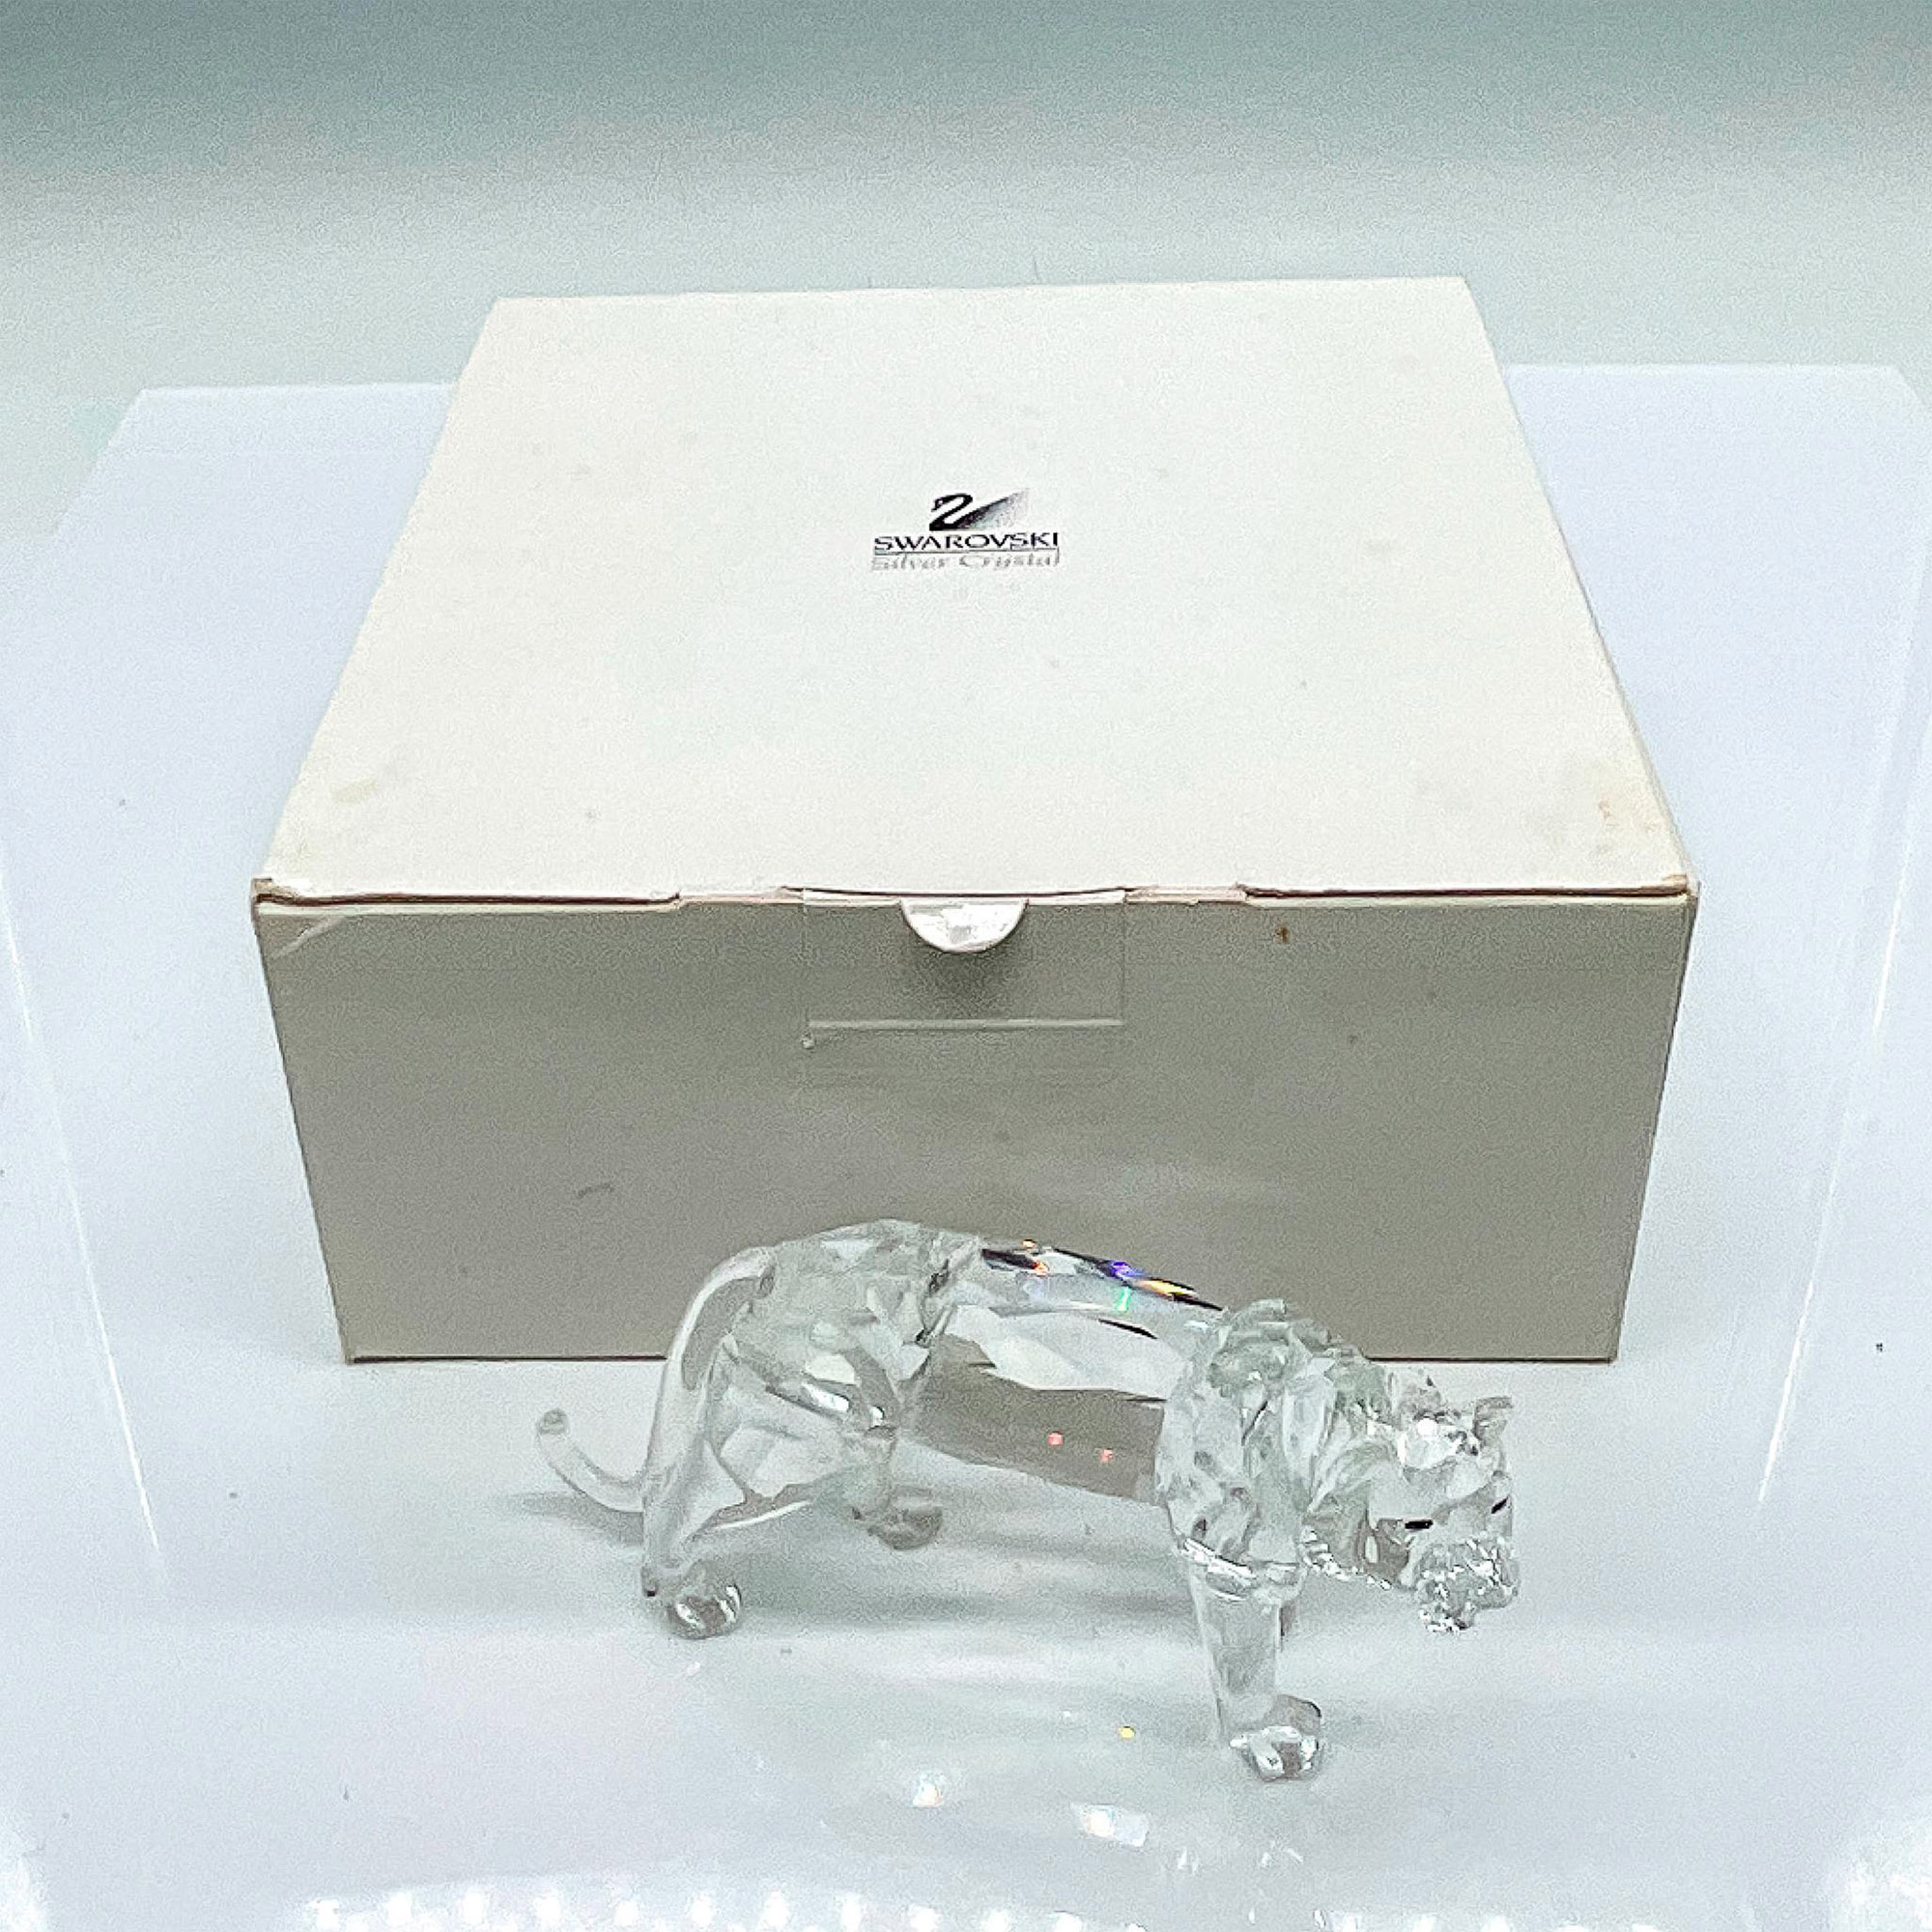 Swarovski Silver Crystal Figurine, Tiger - Image 4 of 4